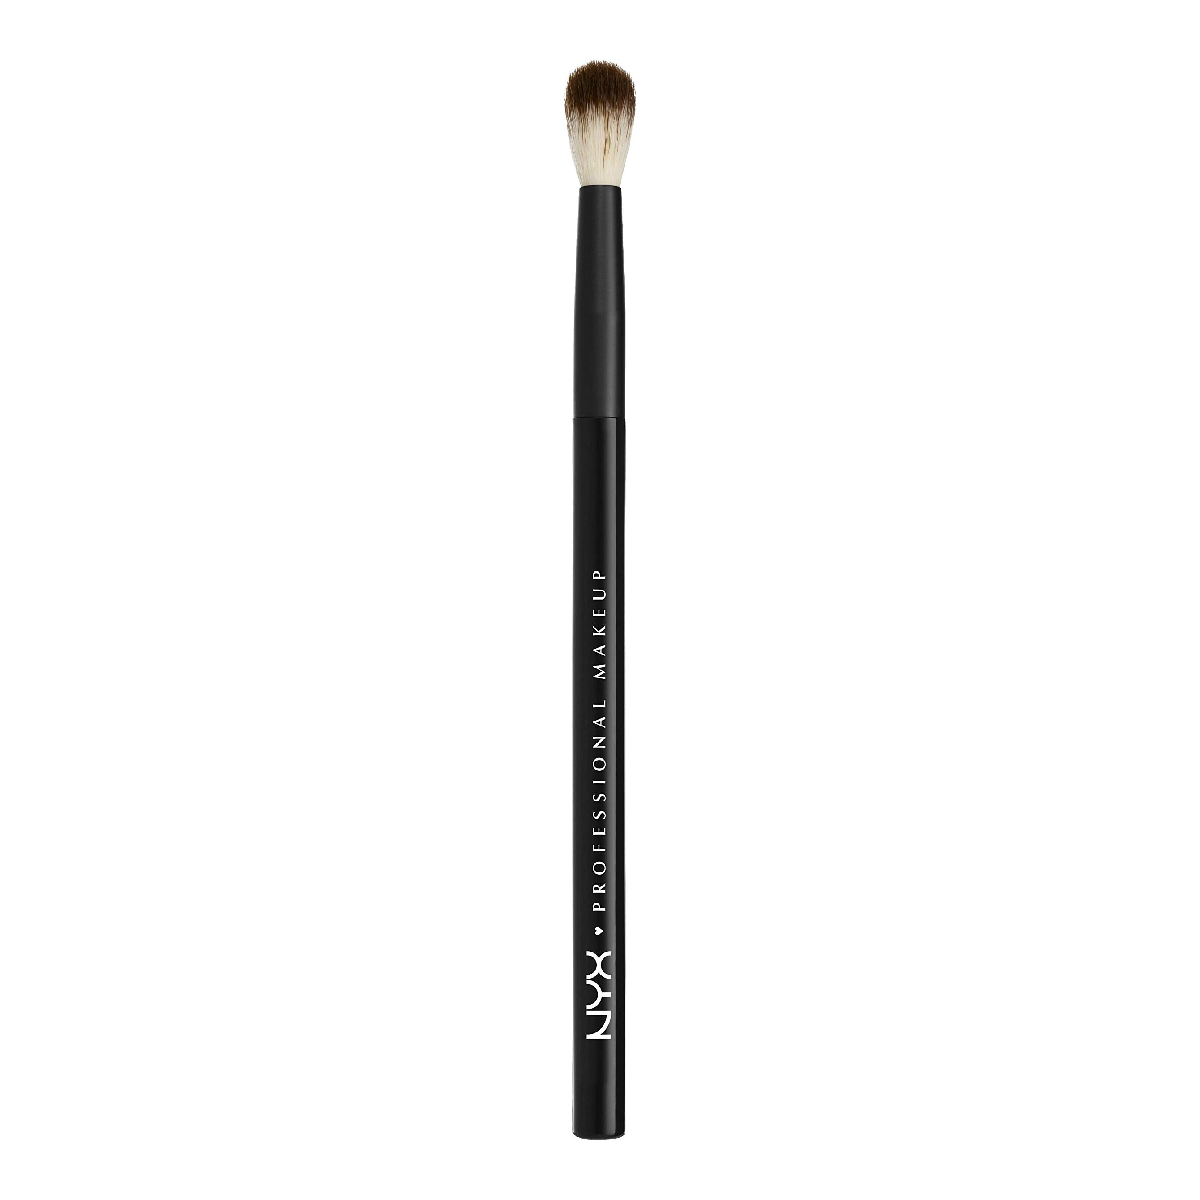 NYX Professional Makeup Pro Powder Brush - a large powder brush on a white background.